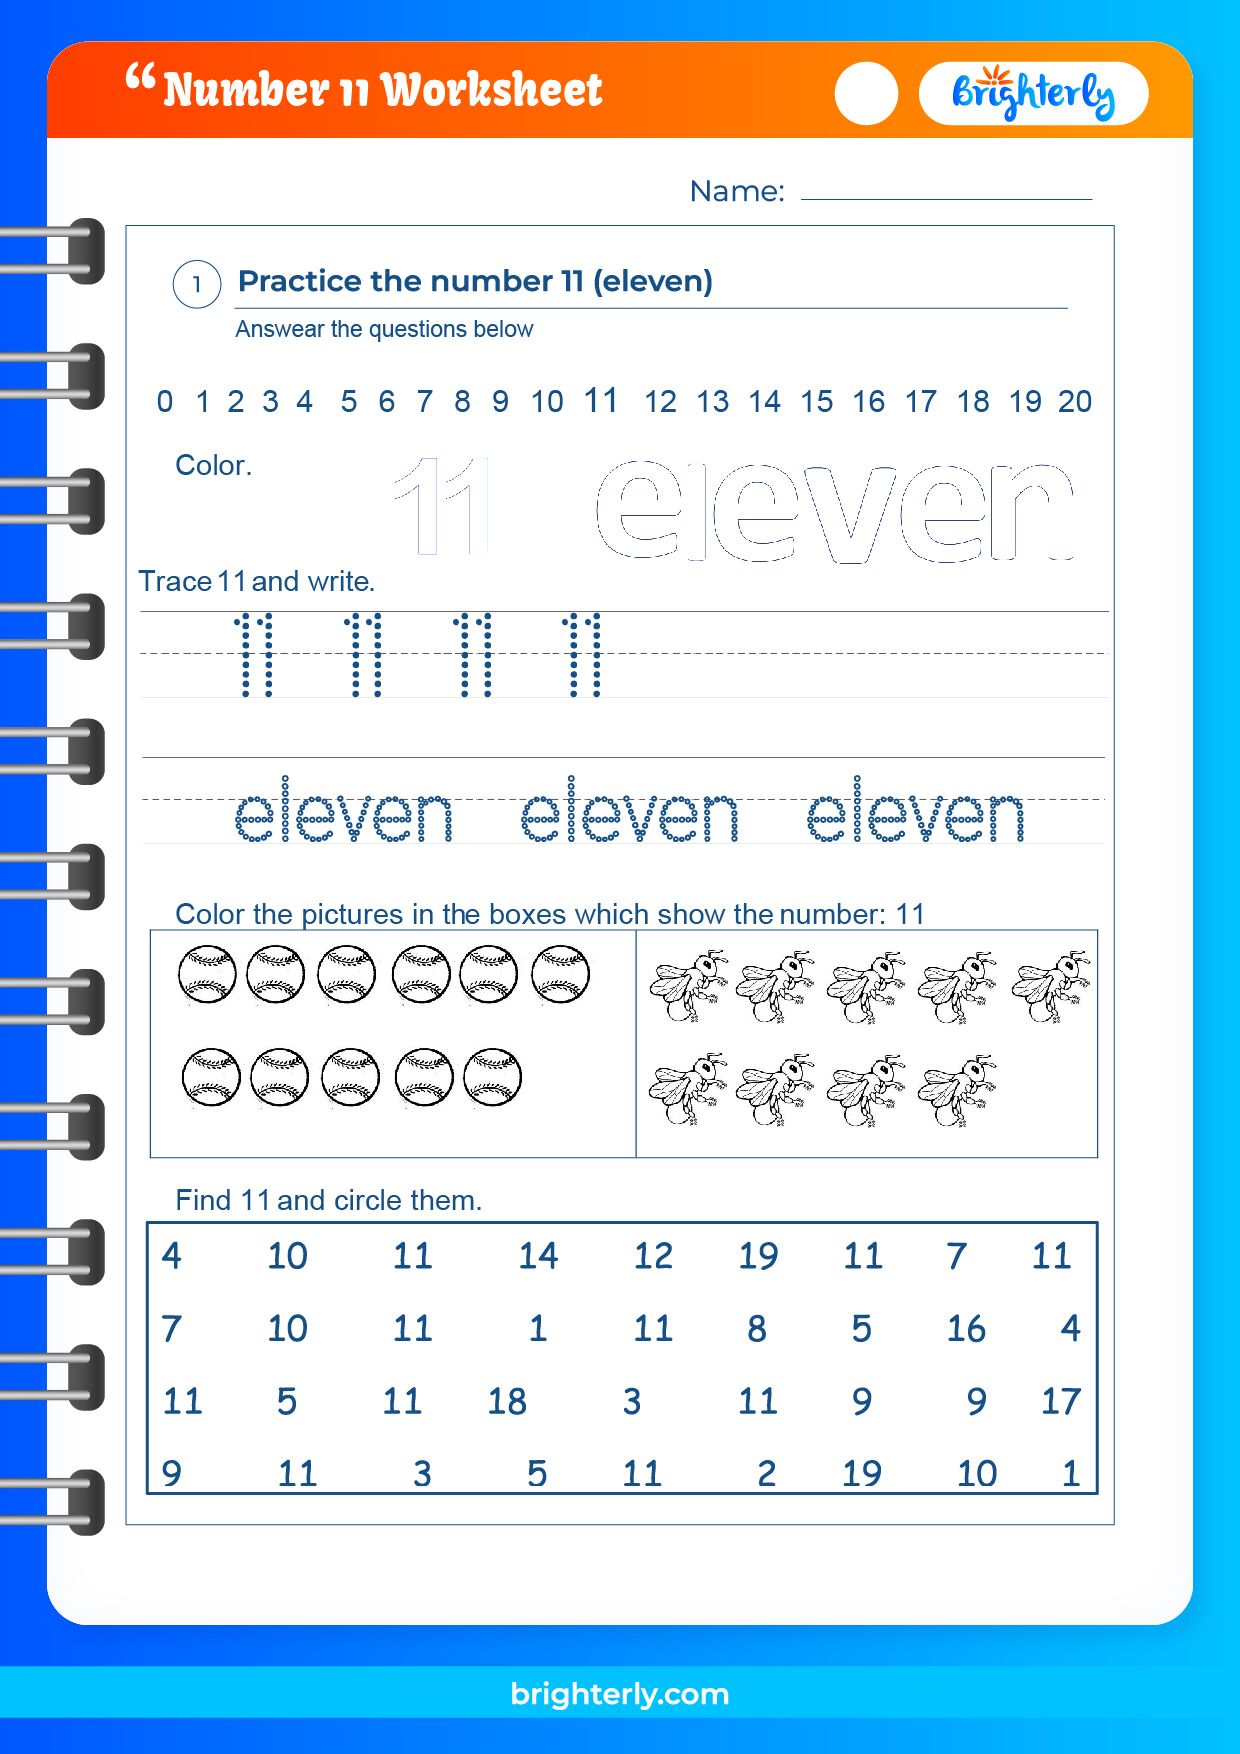 free-printable-number-11-eleven-worksheets-for-kids-pdfs